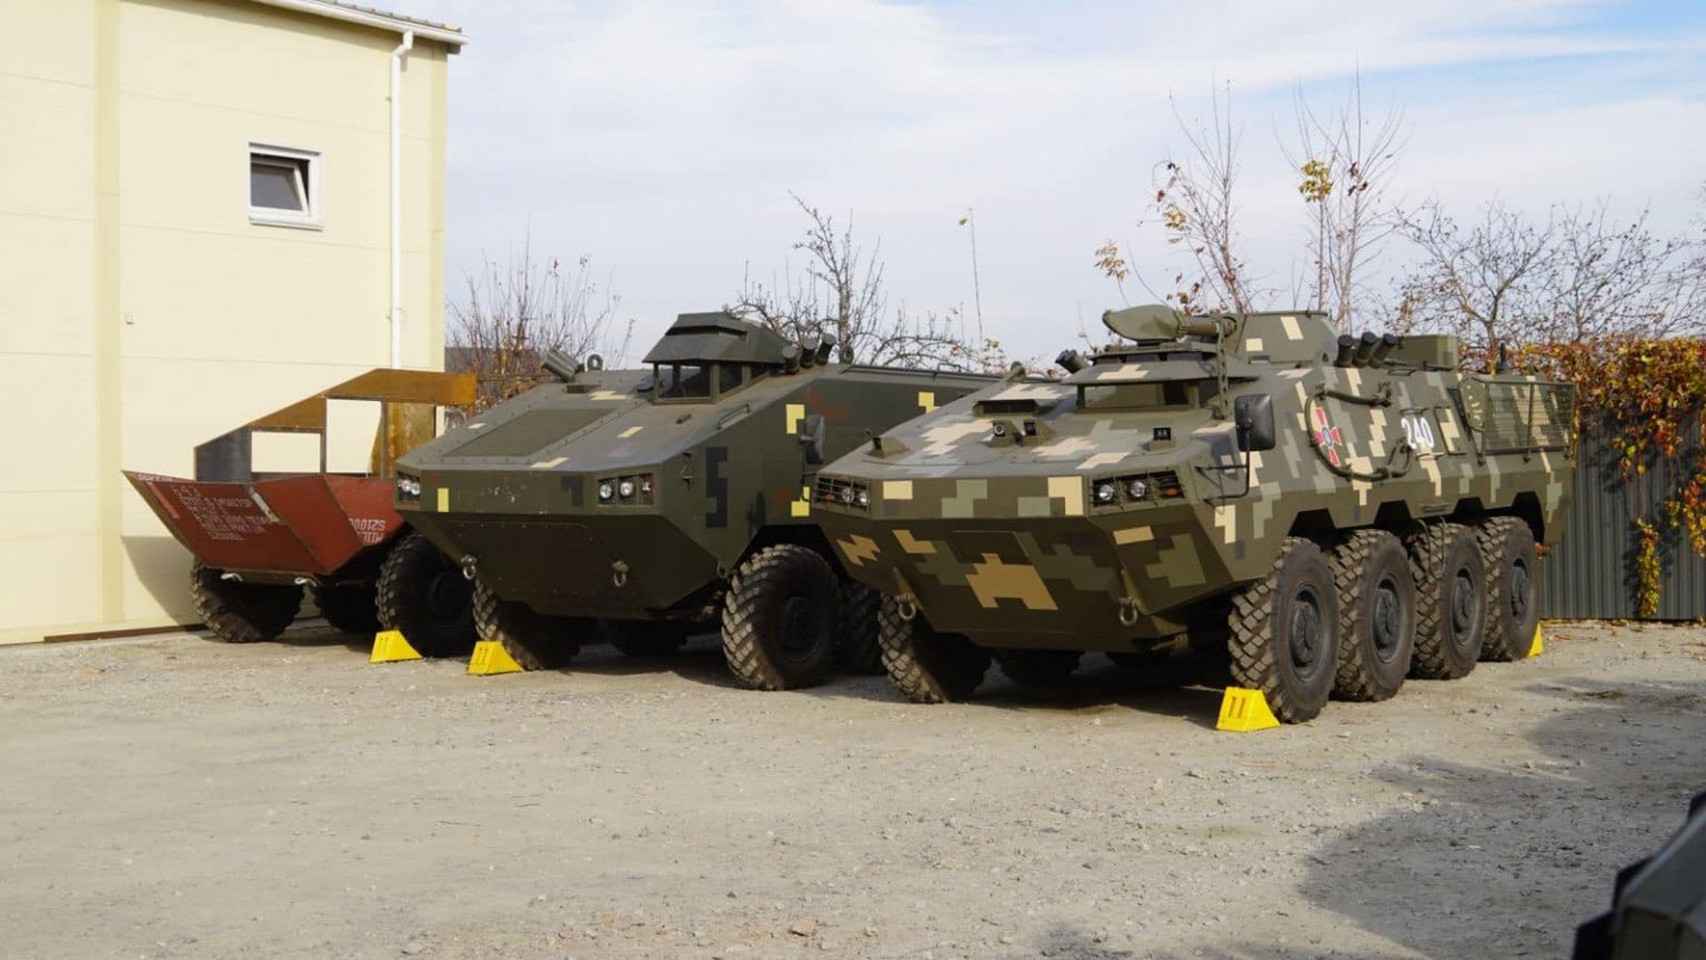 BTR-60M Khorunzhiy de Praktika